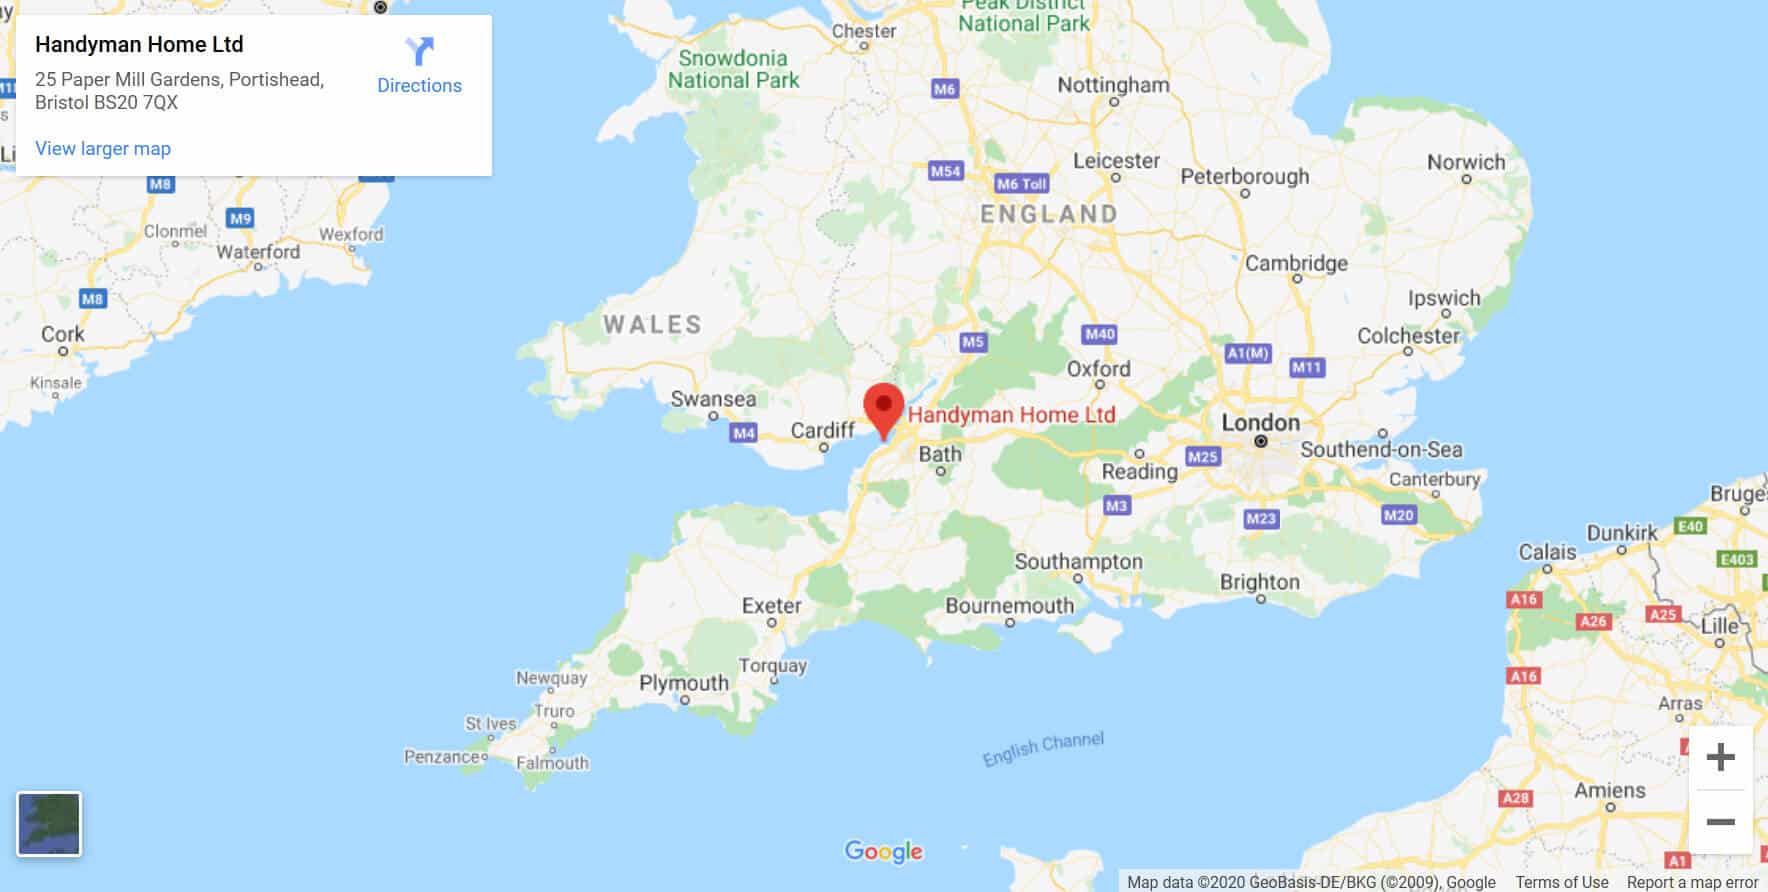 Handyman Home Ltd - Location - Portishead, Bristol, England